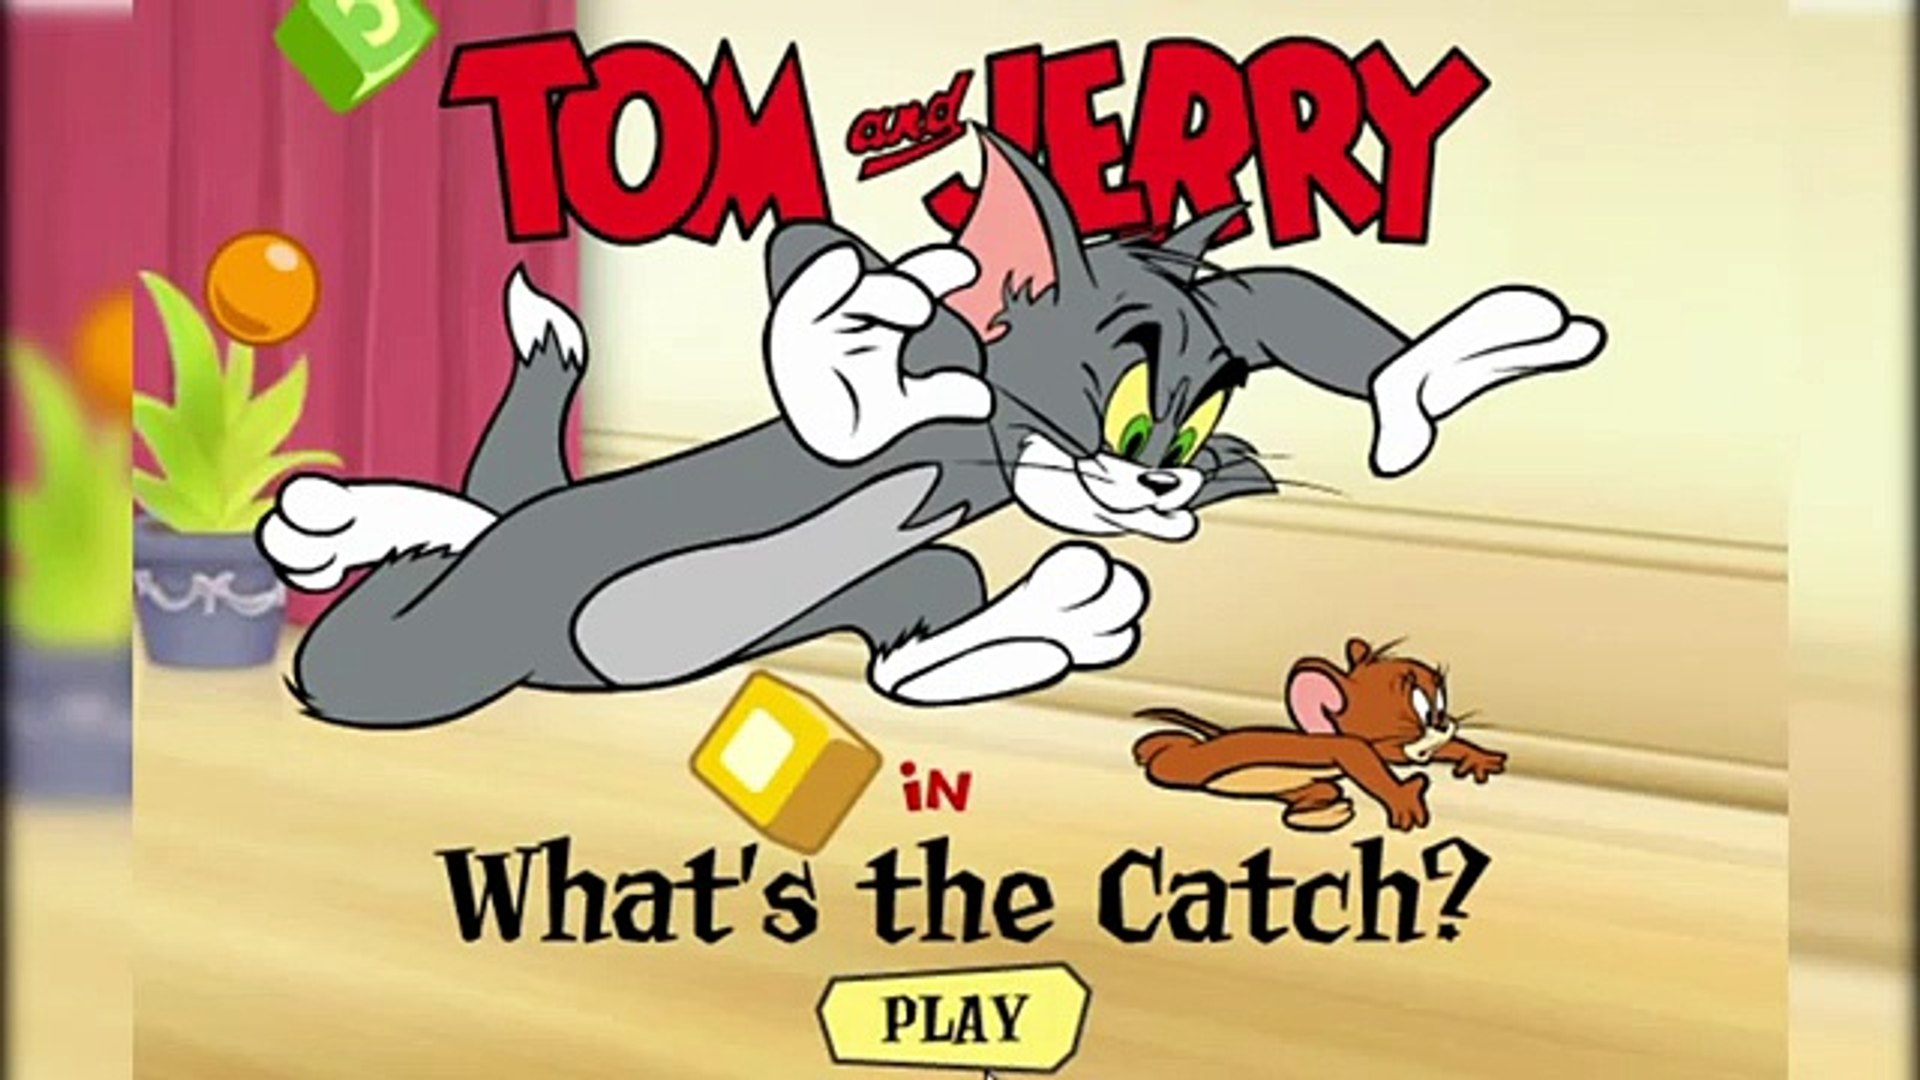 Tom and jerry игры. Том и Джерри. Том и Джерри игра. Флеш игра том и Джерри. Том и Джерри драка.